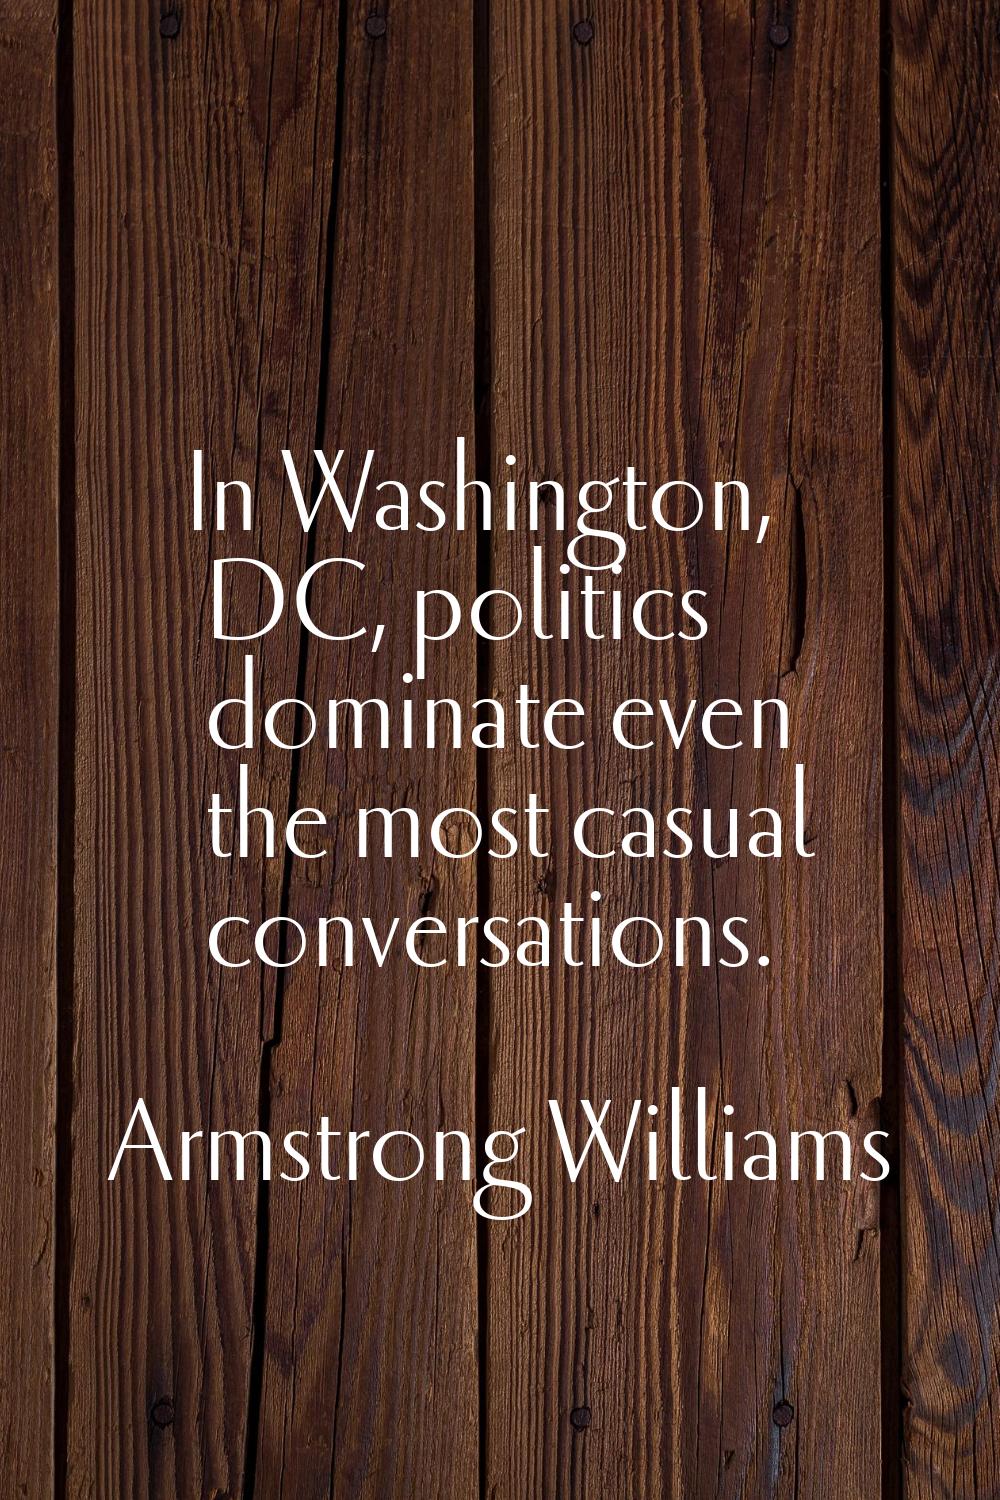 In Washington, DC, politics dominate even the most casual conversations.